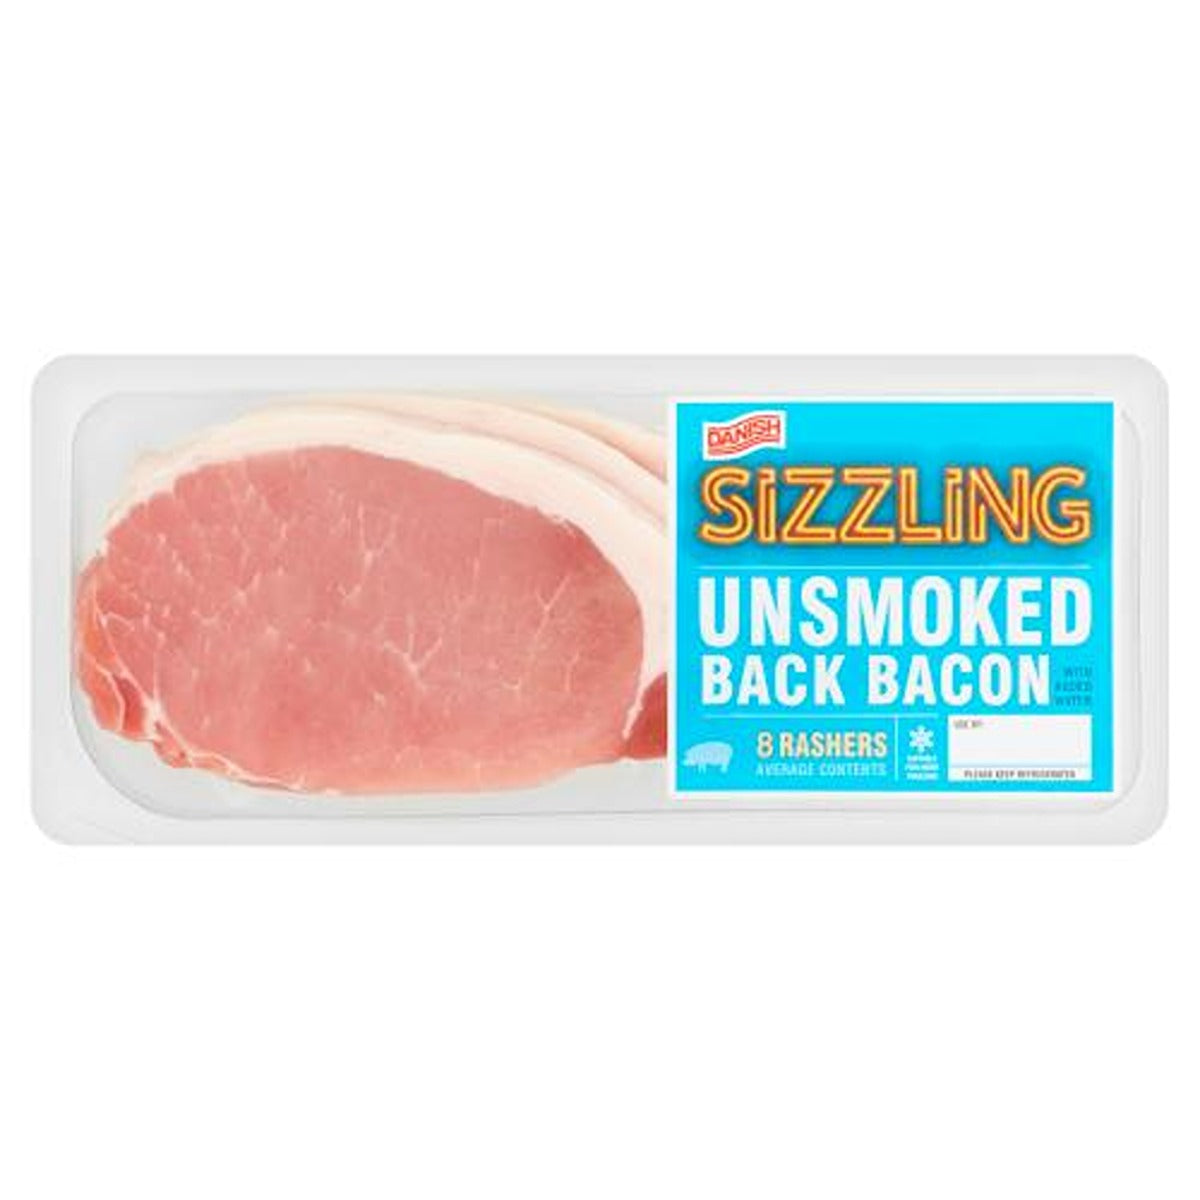 Danish Sizzling - Unsmoked Back Bacon - 8 Rashers 250g.